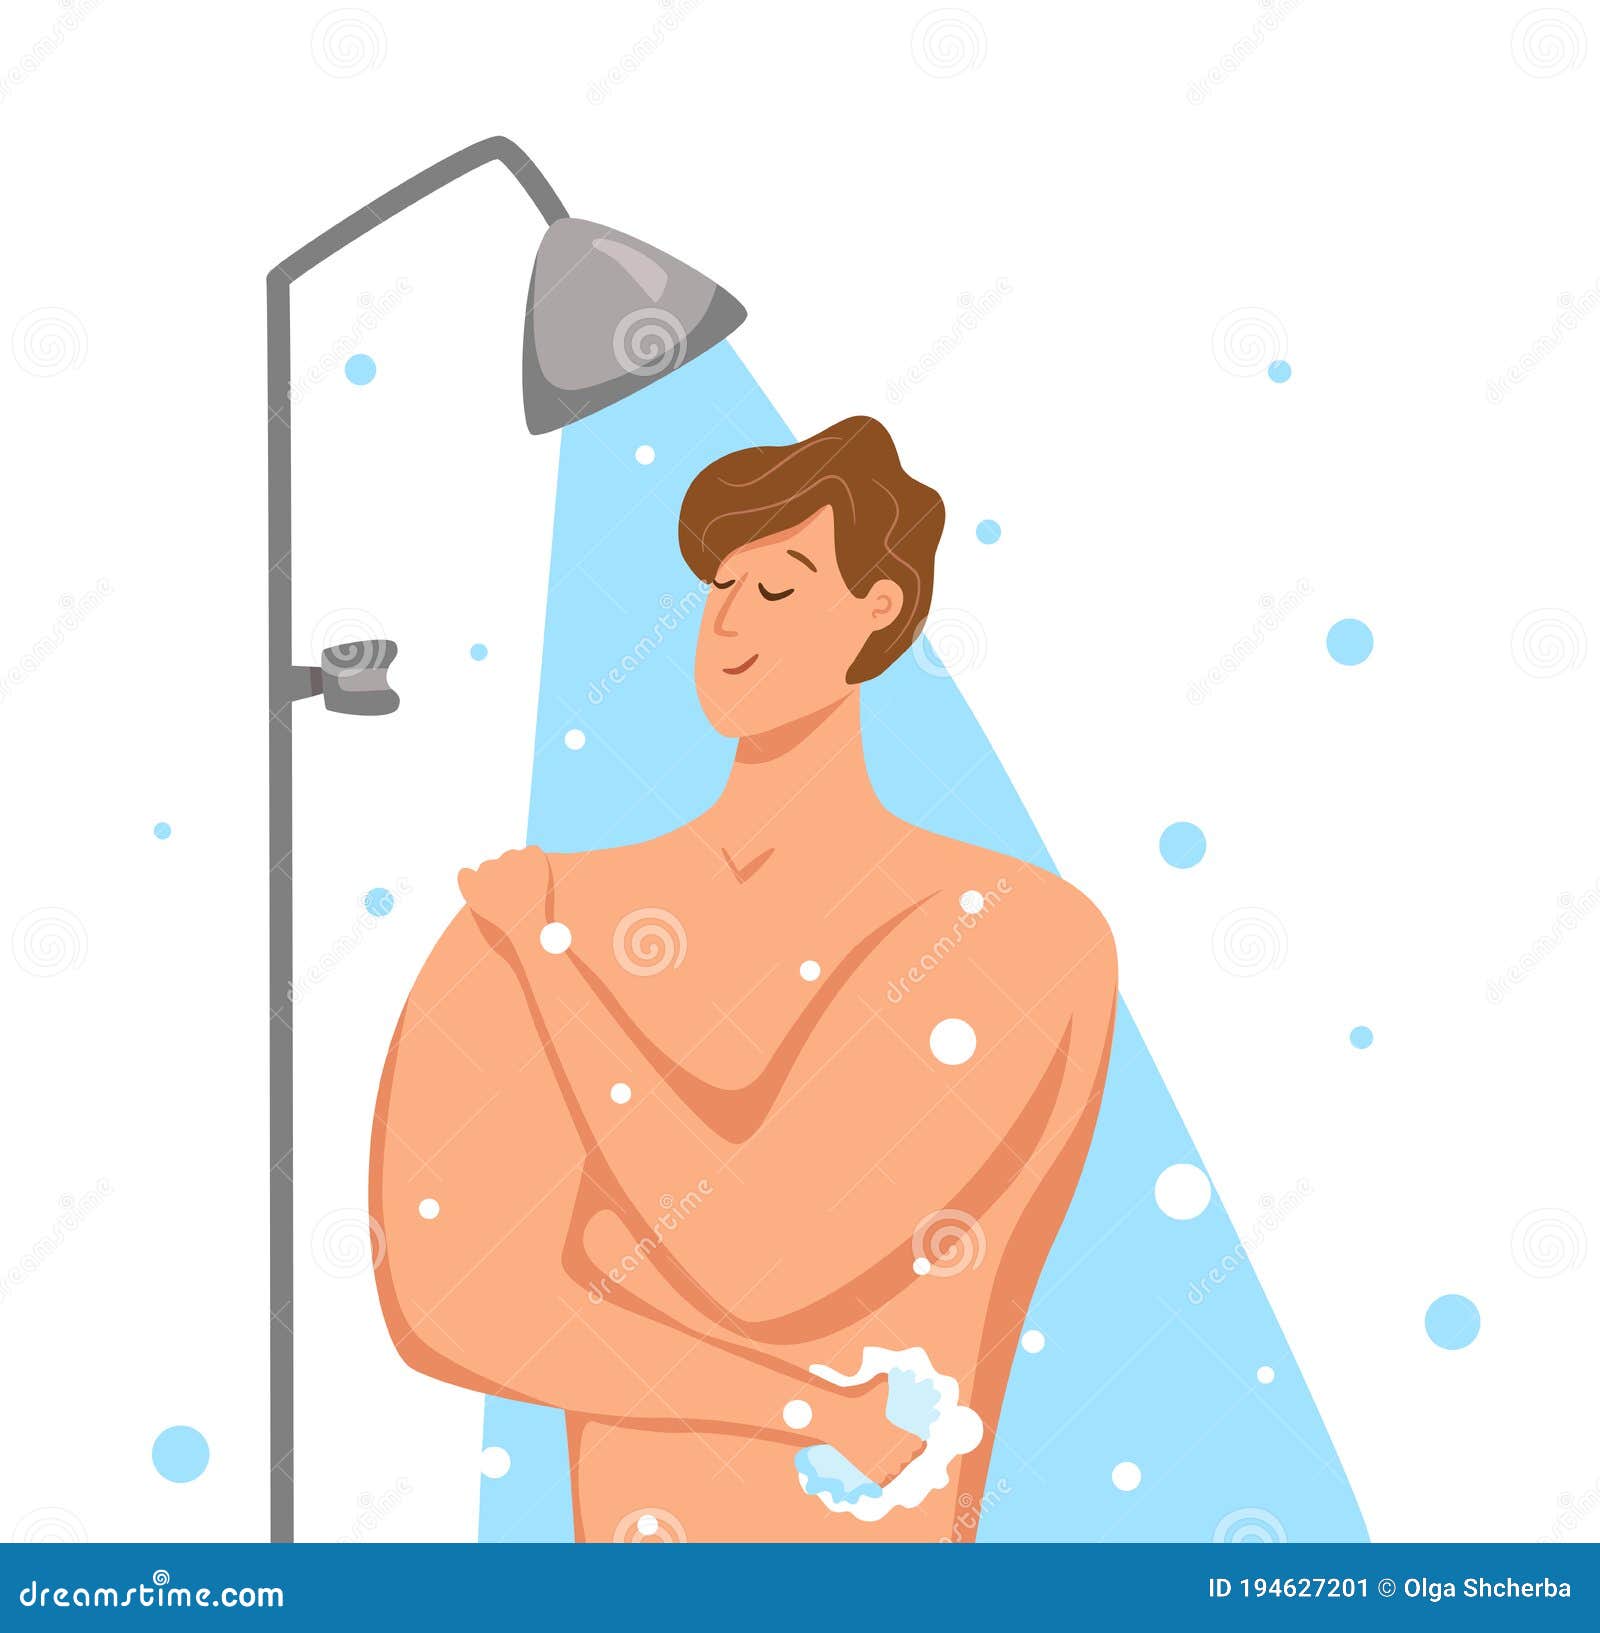 Man Taking Shower In Bathroom Vector Illustration Of Happy Guy Washing